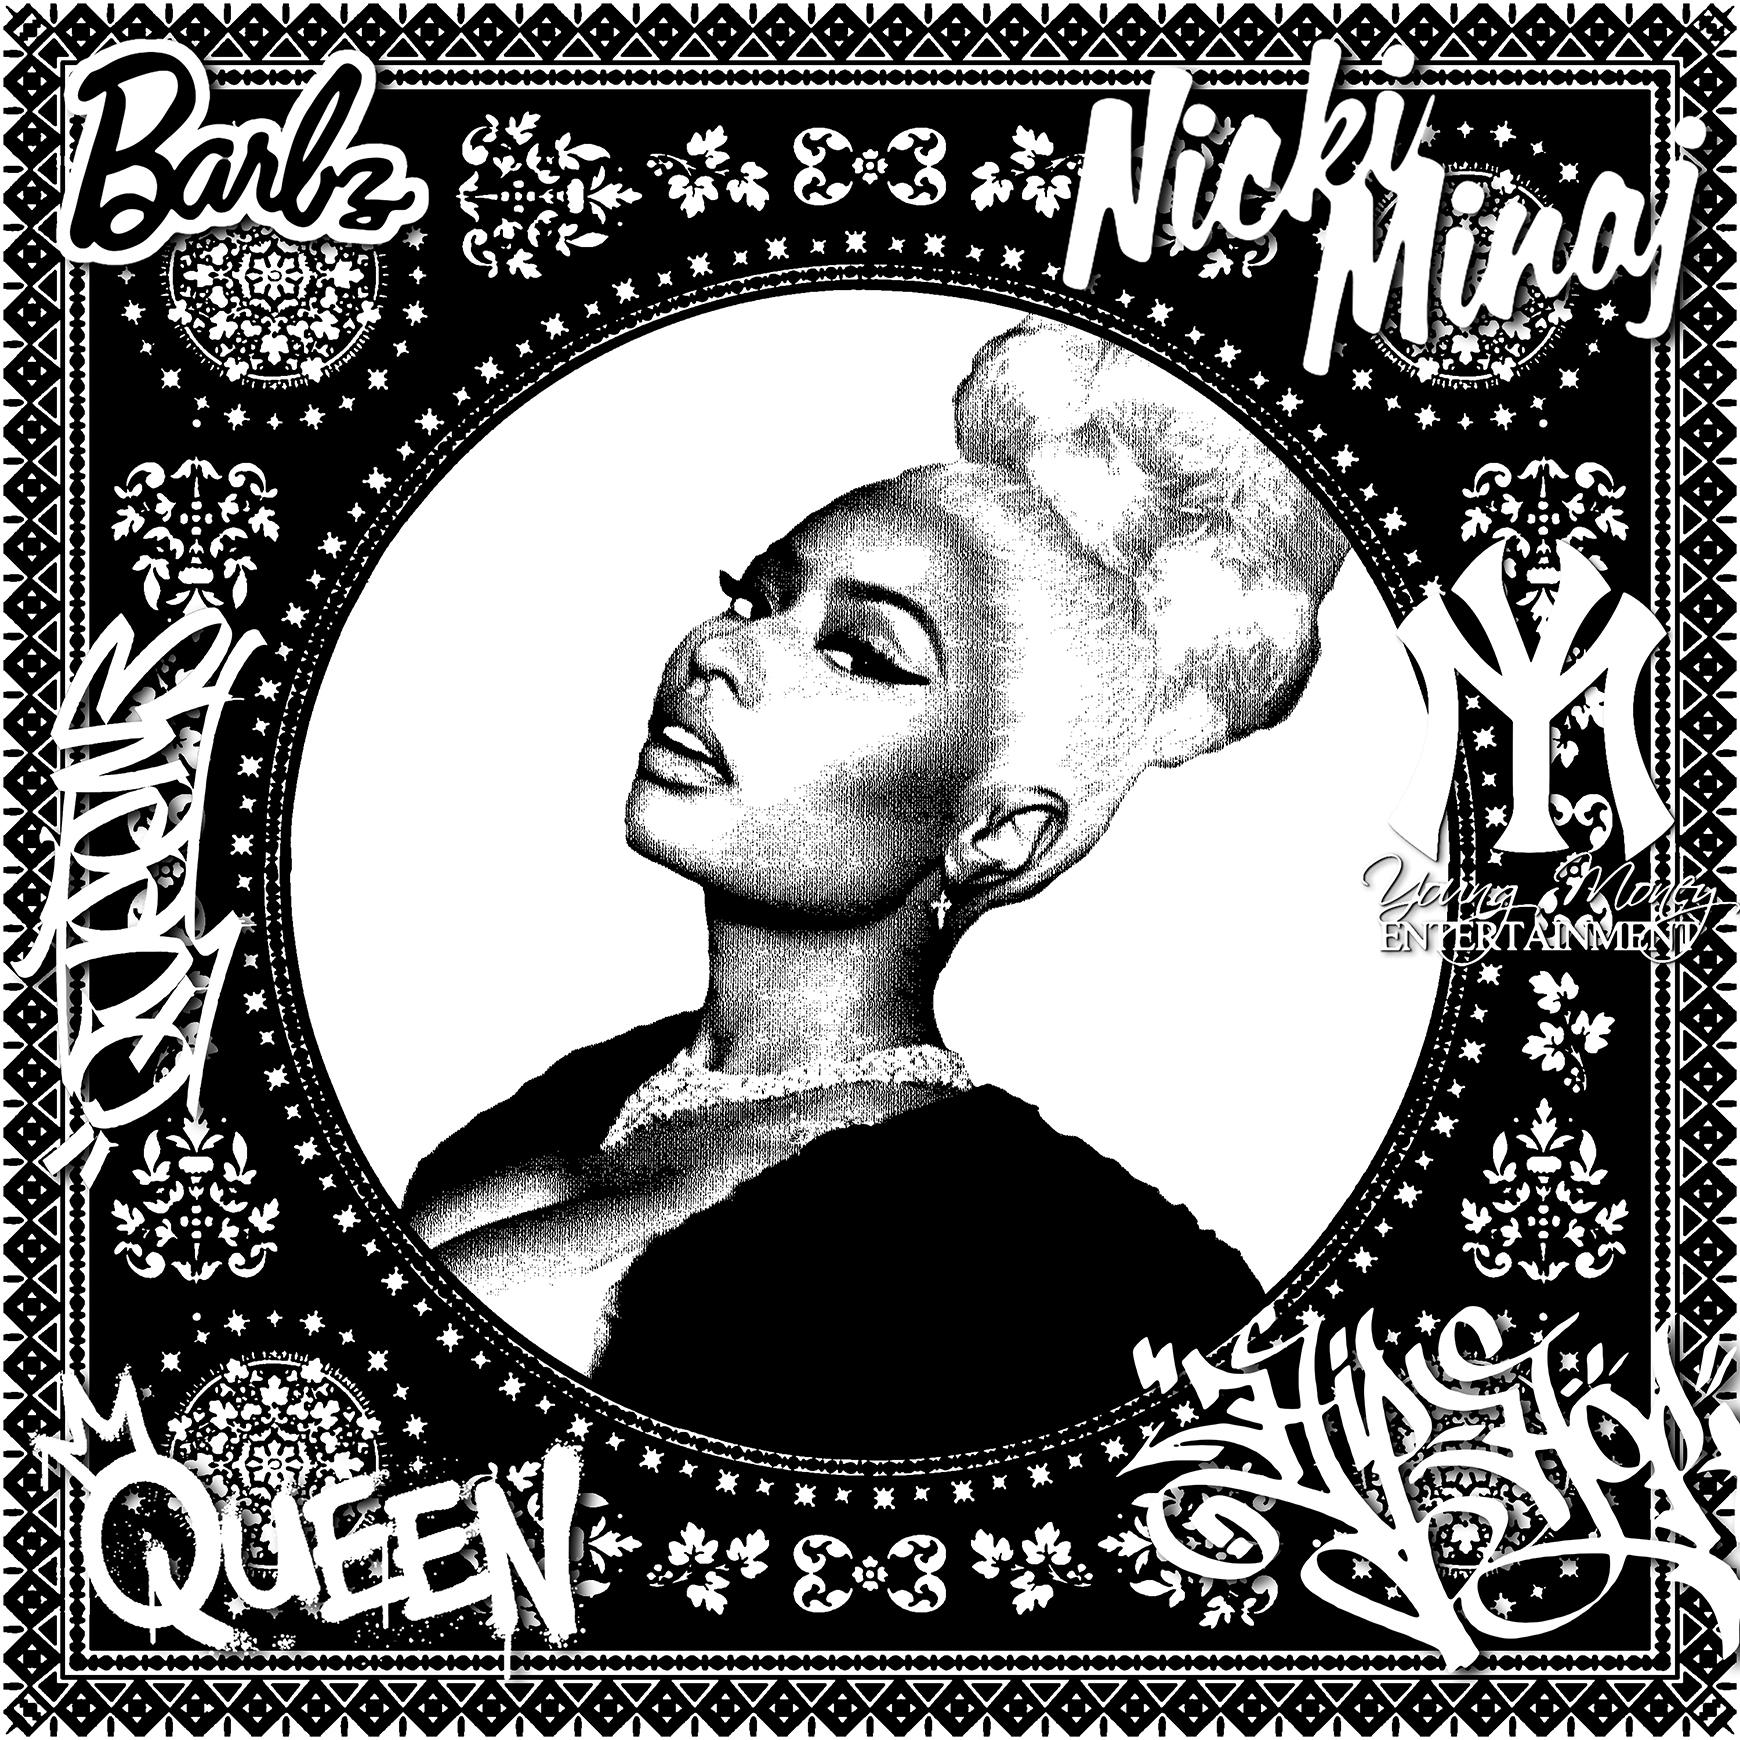 Nicki Minaj (Black & White) (50 Years, Hip Hop, Rap, Iconic, Artist, Musician) - Print by Agent X